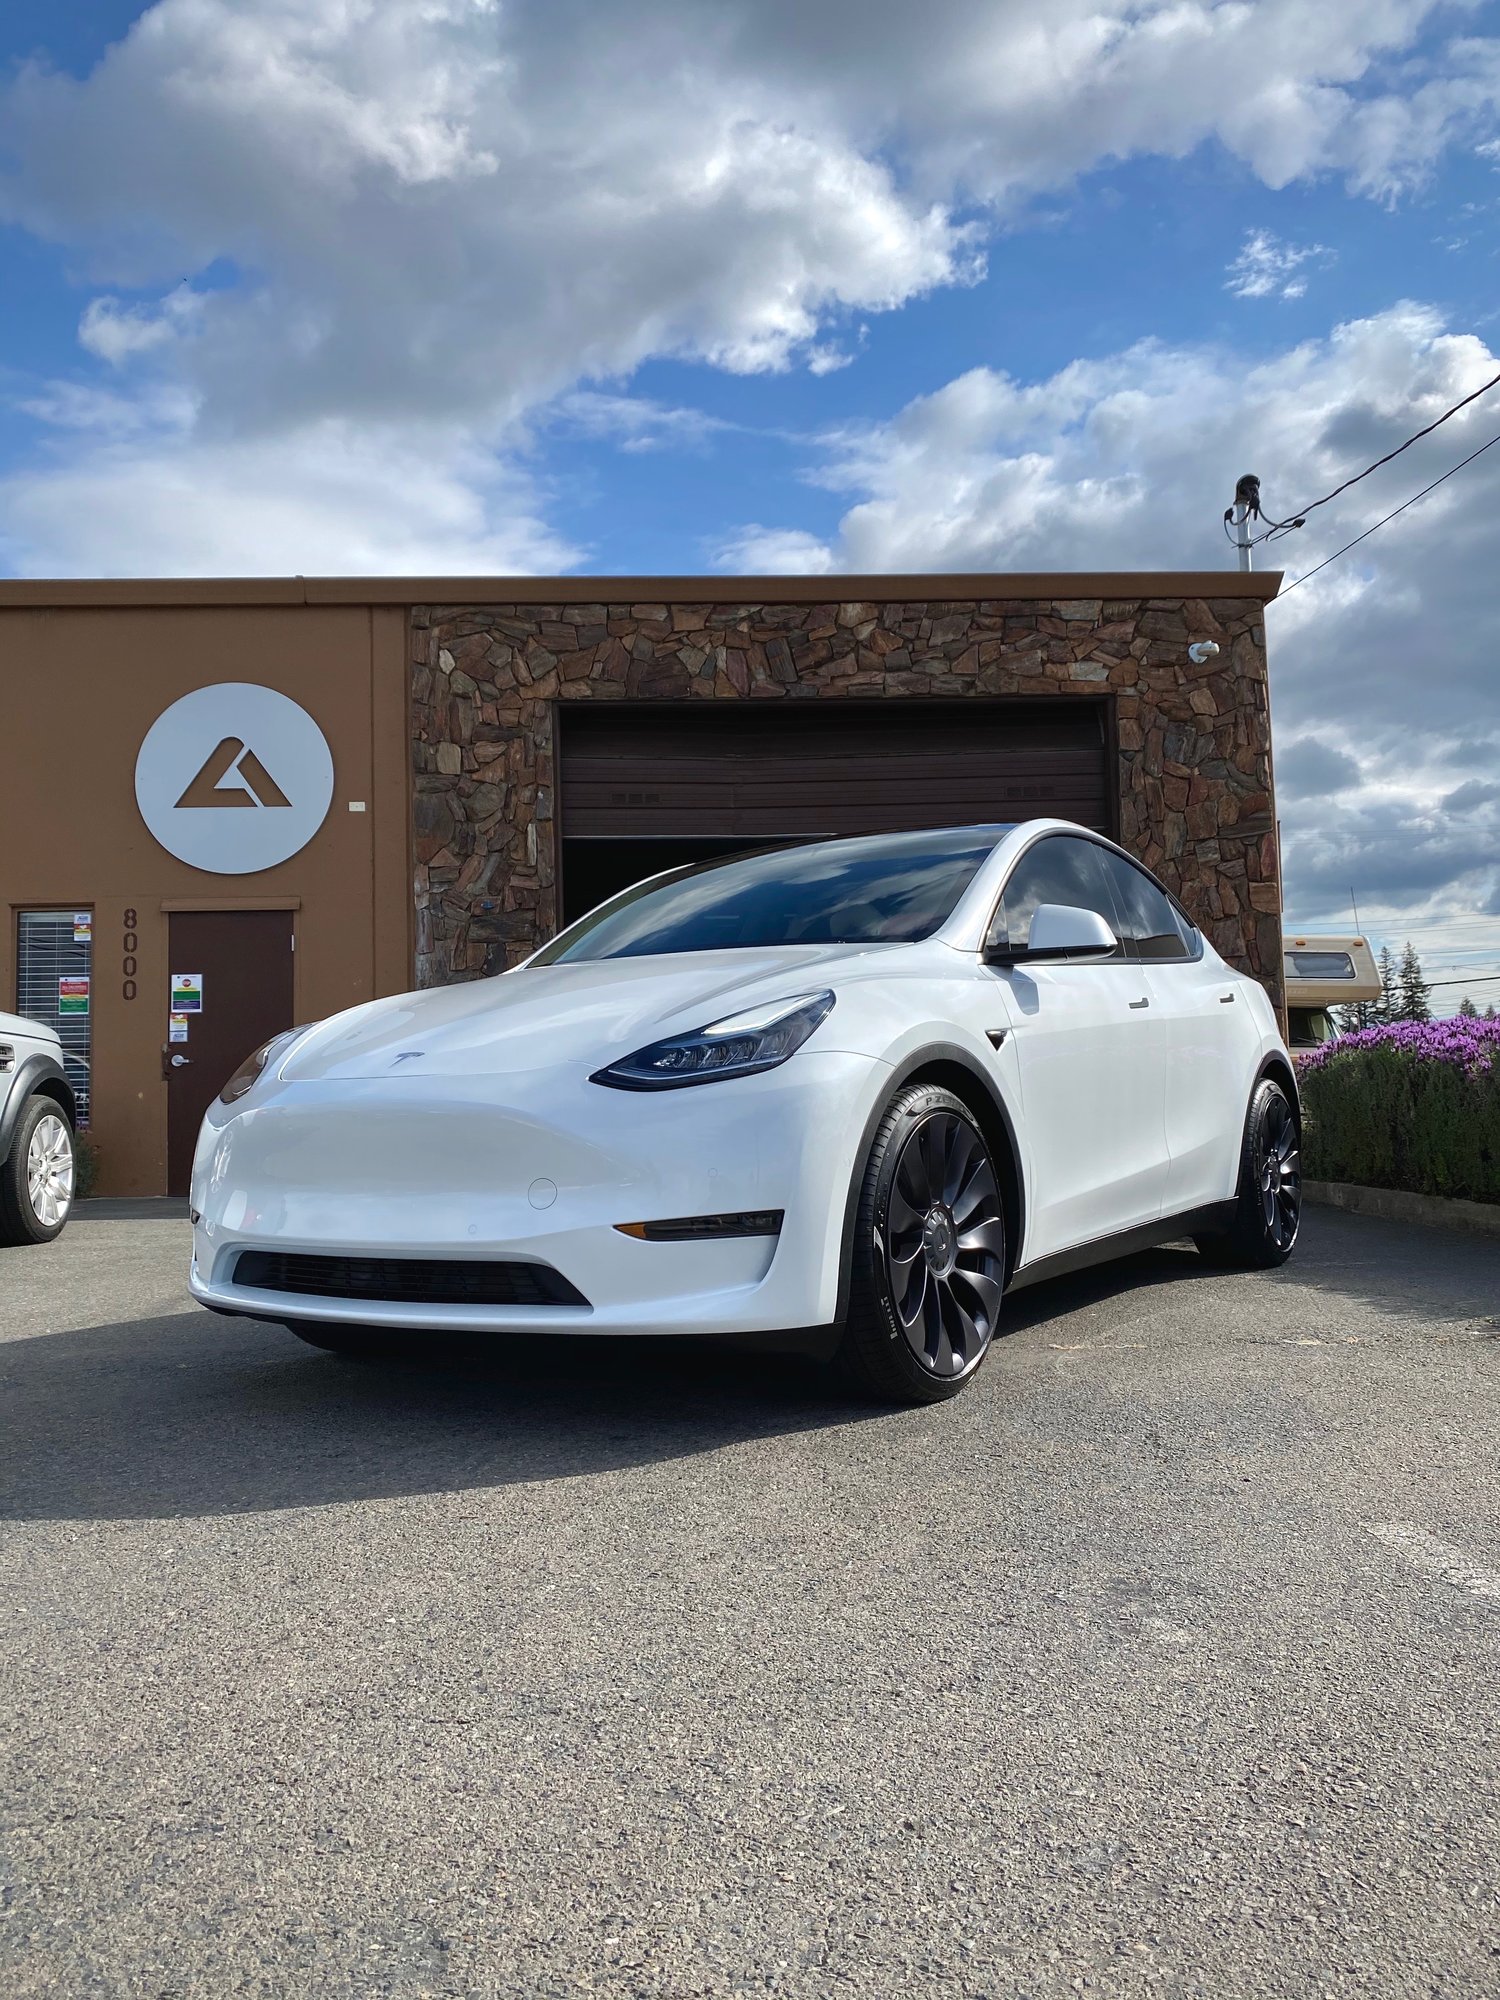 2020 Tesla Model Y Pearl White Multi-Coat  (Appearance Solutions-Sacramento,CA)~38.JPG